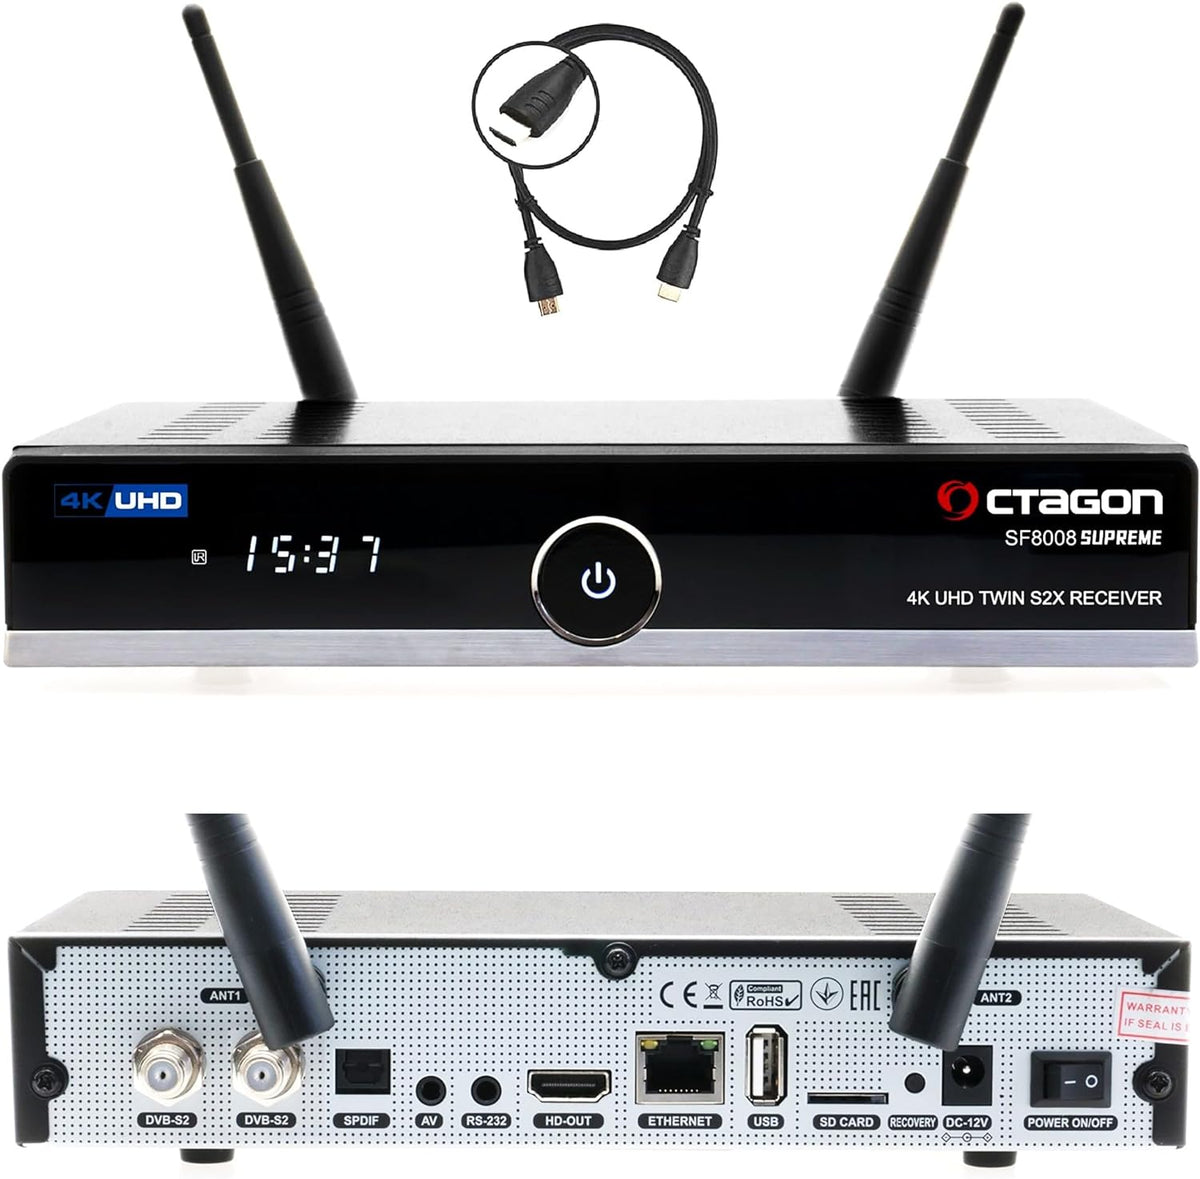 OCTAGON SF8008 SUPREME 4K UHD E2 DVB-S2X TWIN (DUAL OS)